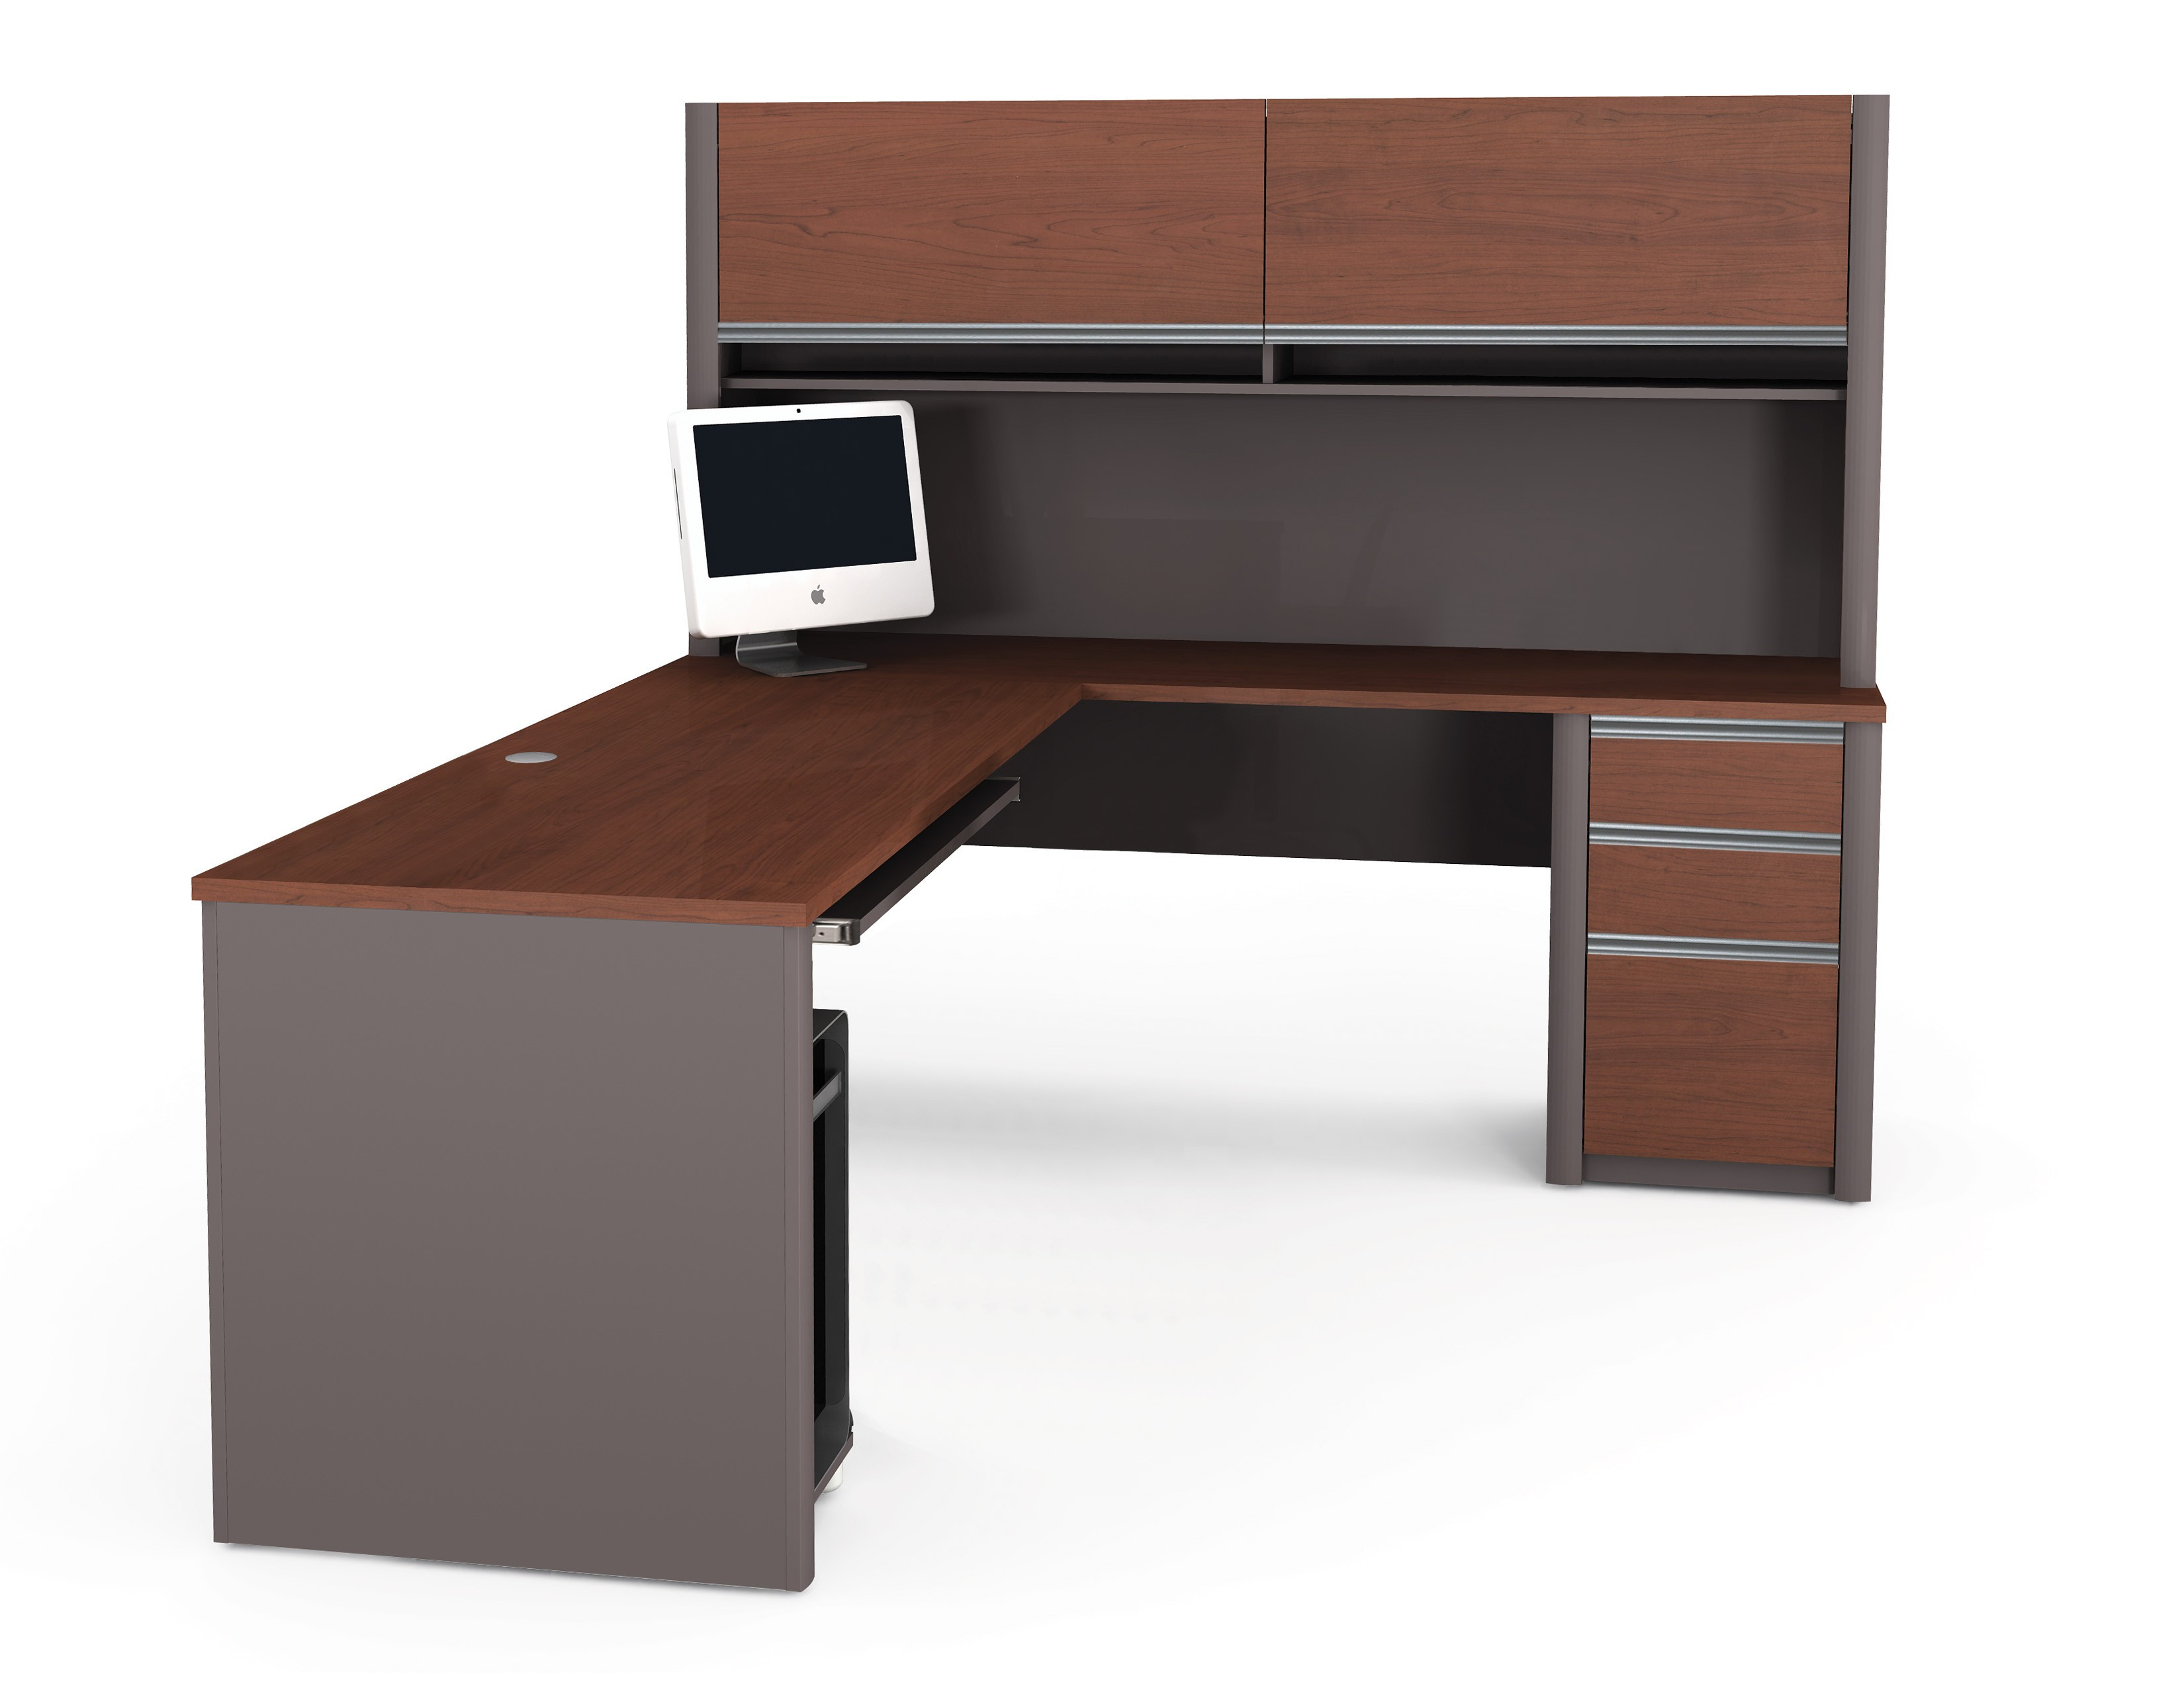 Best ideas about Bestar Office Furniture
. Save or Pin Furniture Bestar Furniture For Inspiring Modern Interior Now.